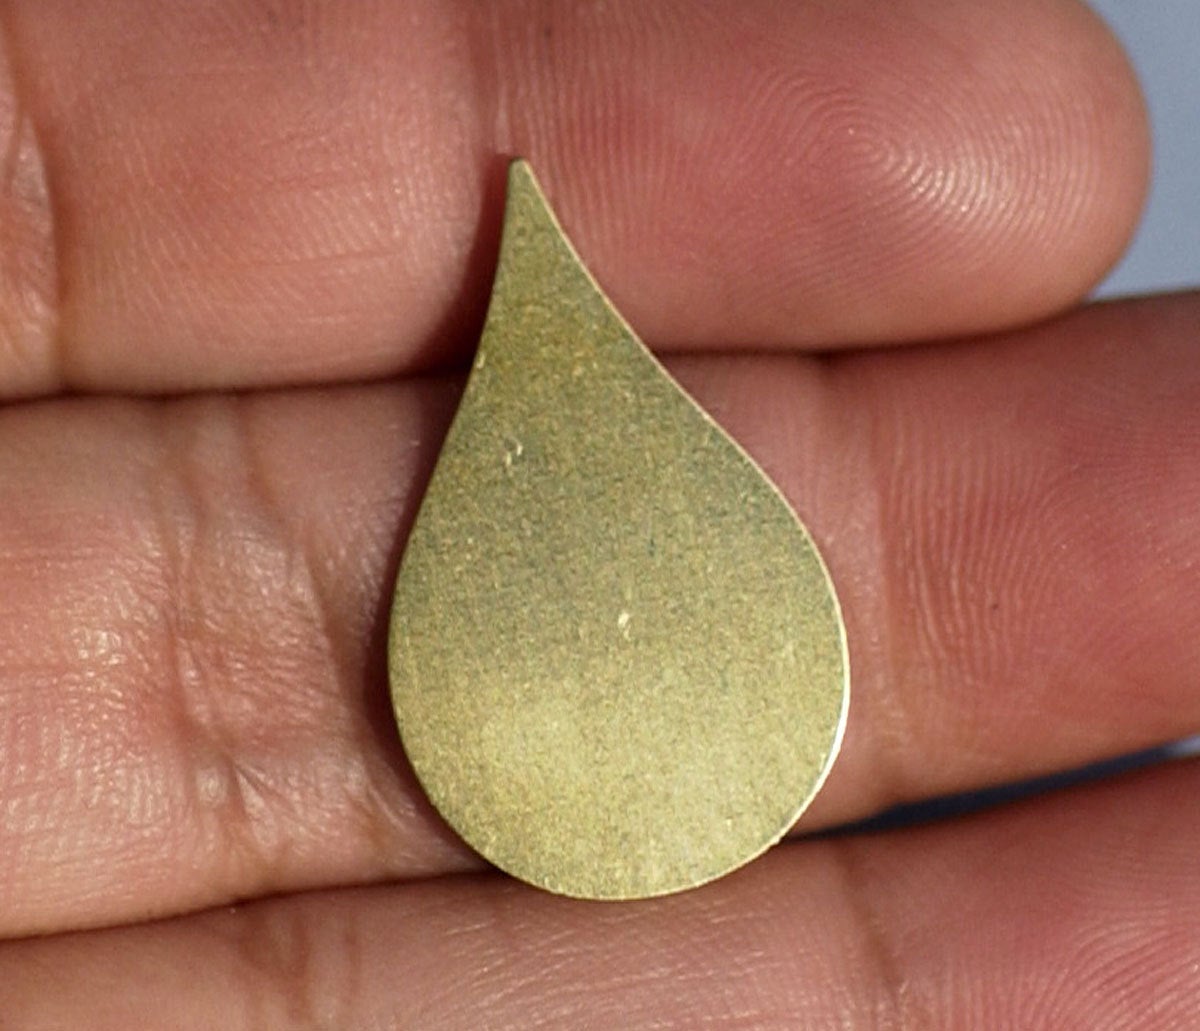 Pointed Teardrop 24mm x 15mm 24G 22g 20g rain drops, copper, brass, bronze, or nickel silver